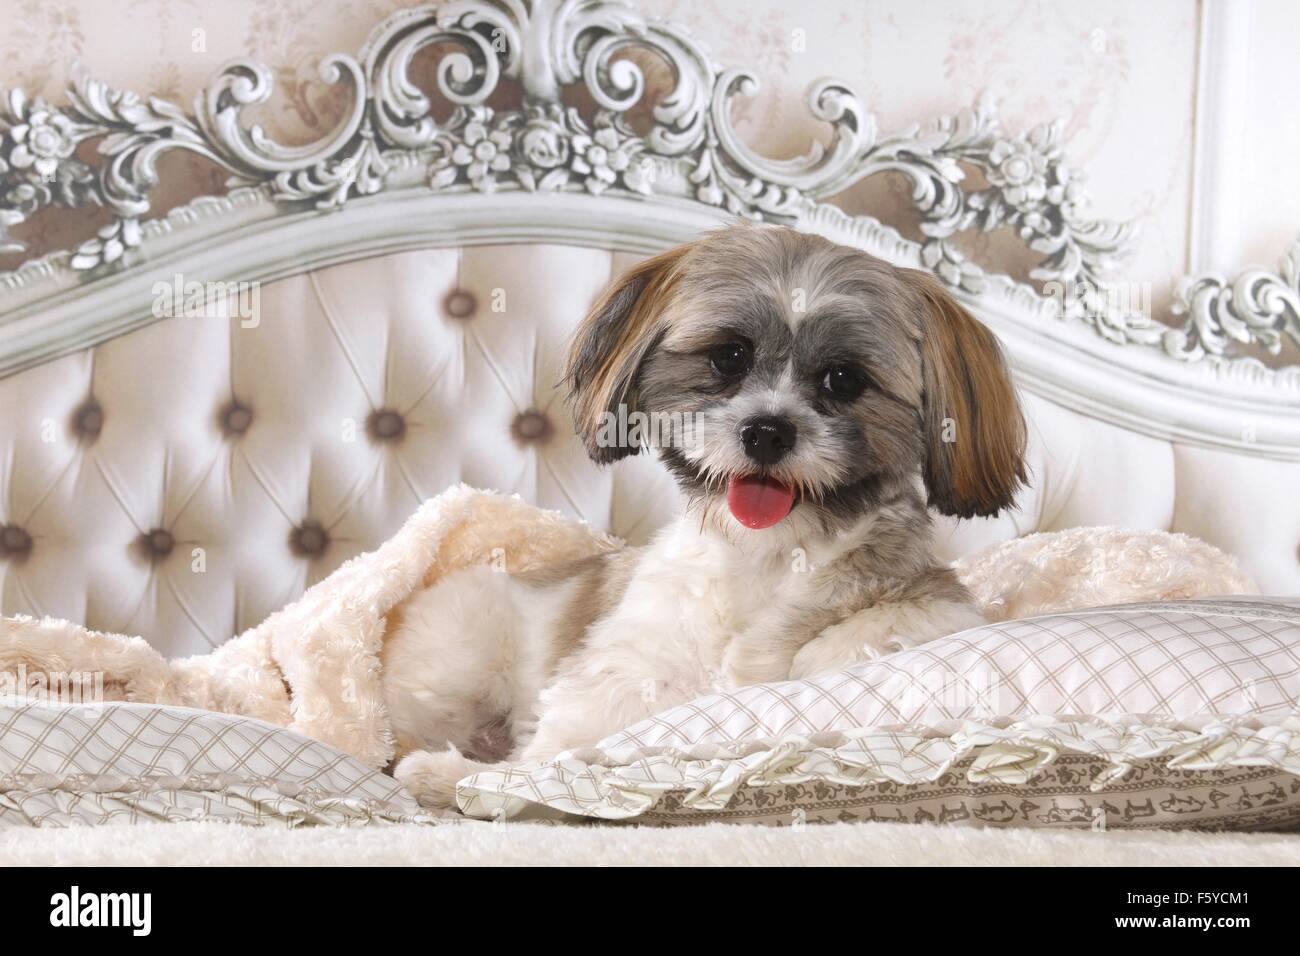 Shih Tzu in bed Stock Photo - Alamy